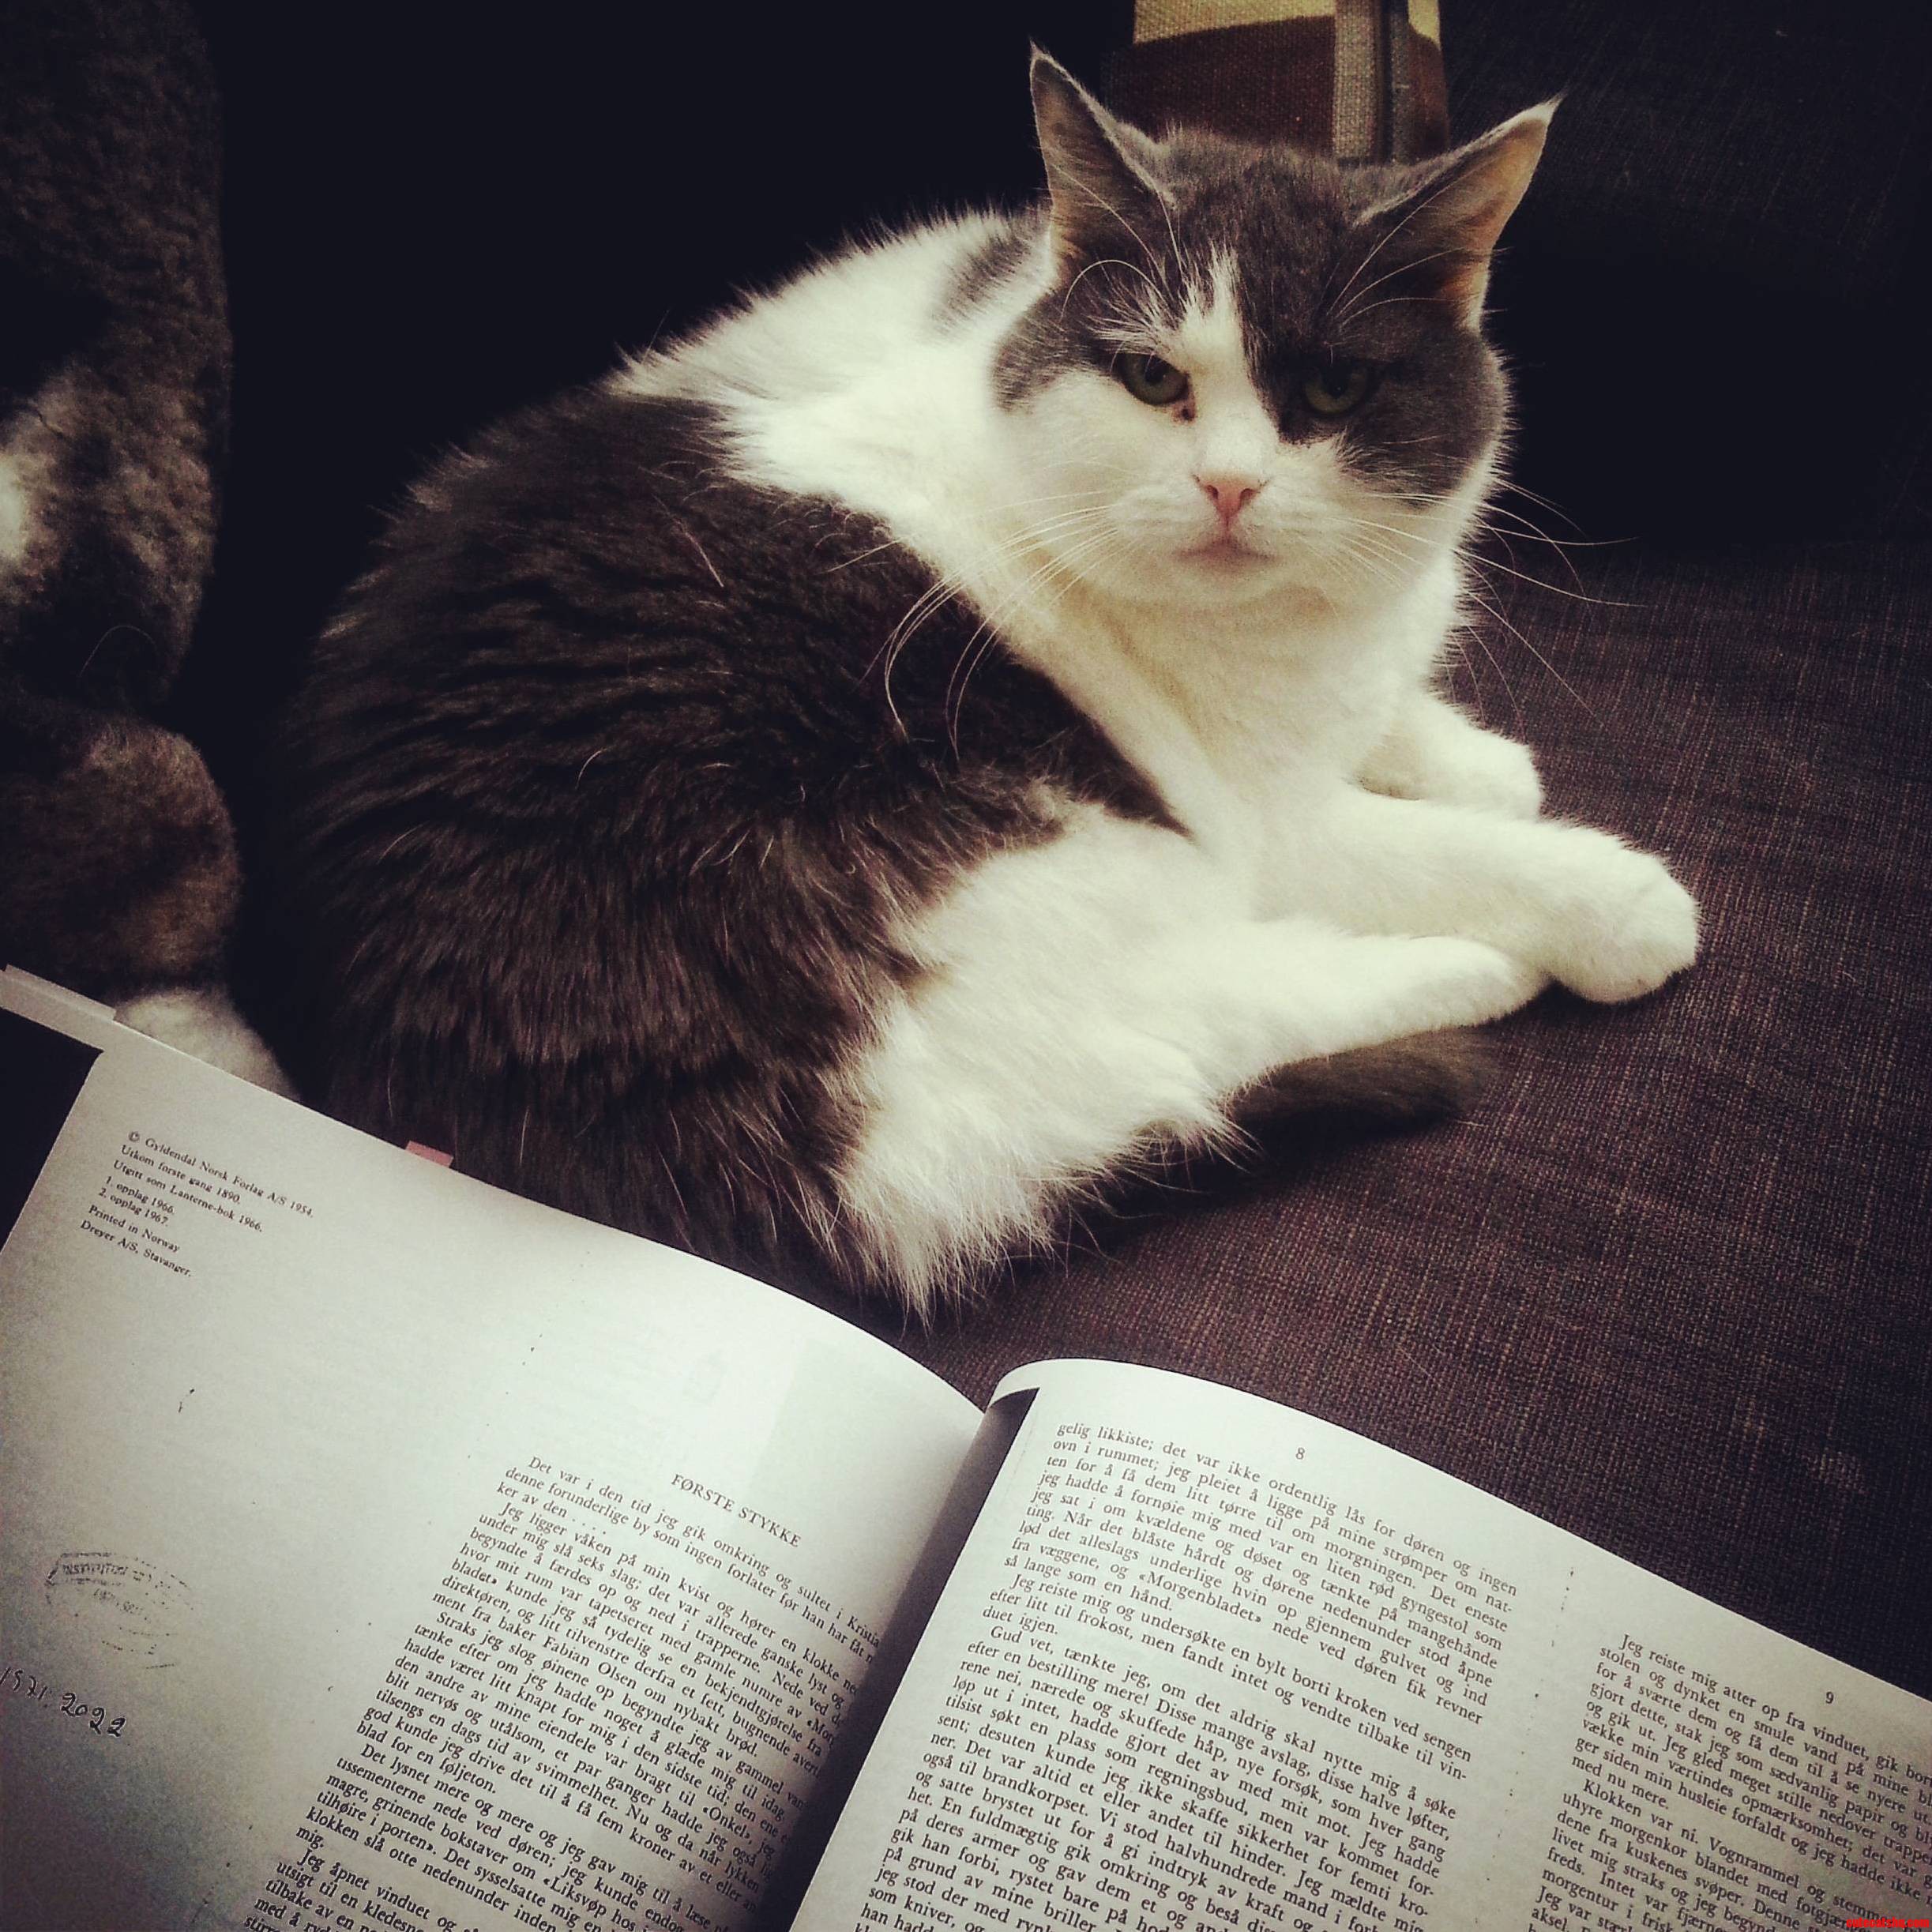 Now She Is Helping Me Do My Norwegian Homework.